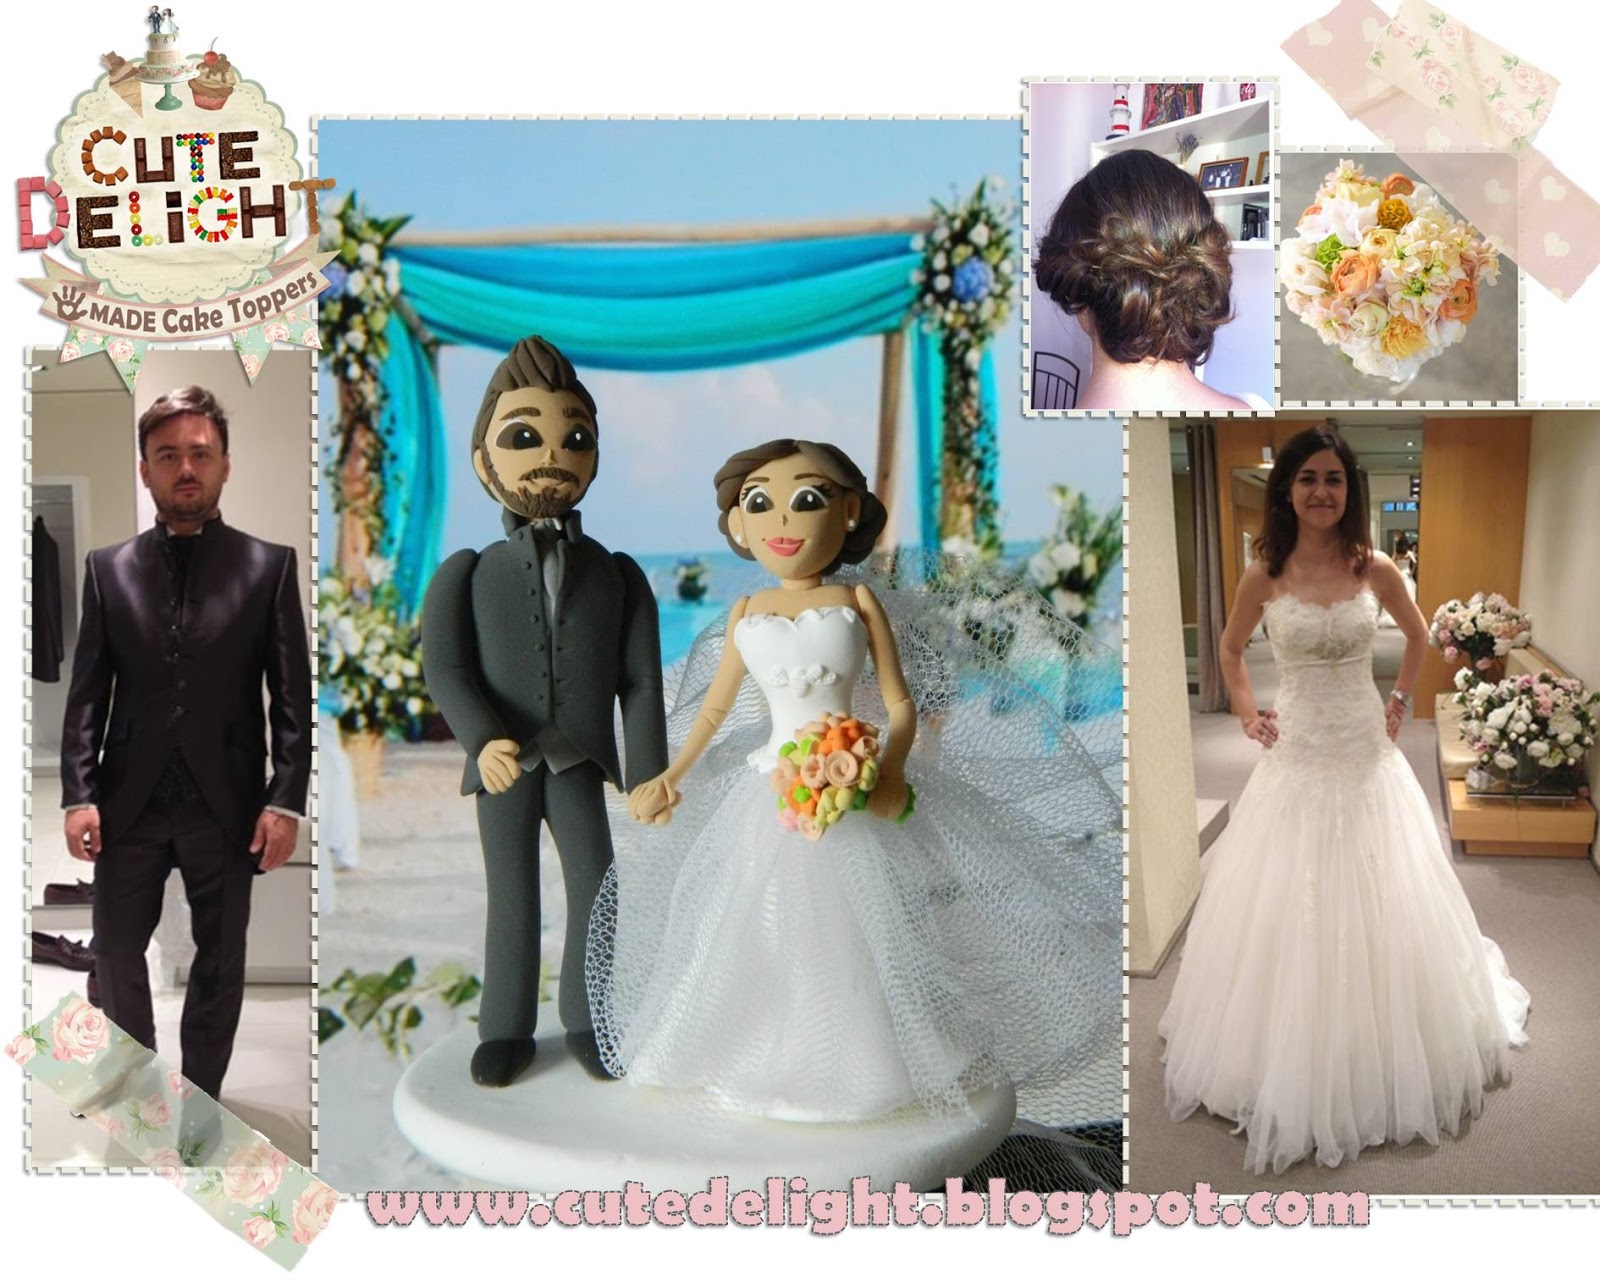 unique wedding cake toppers Cute Delight - Custom Handmade Wedding Cake Topper -Bride and Groom 